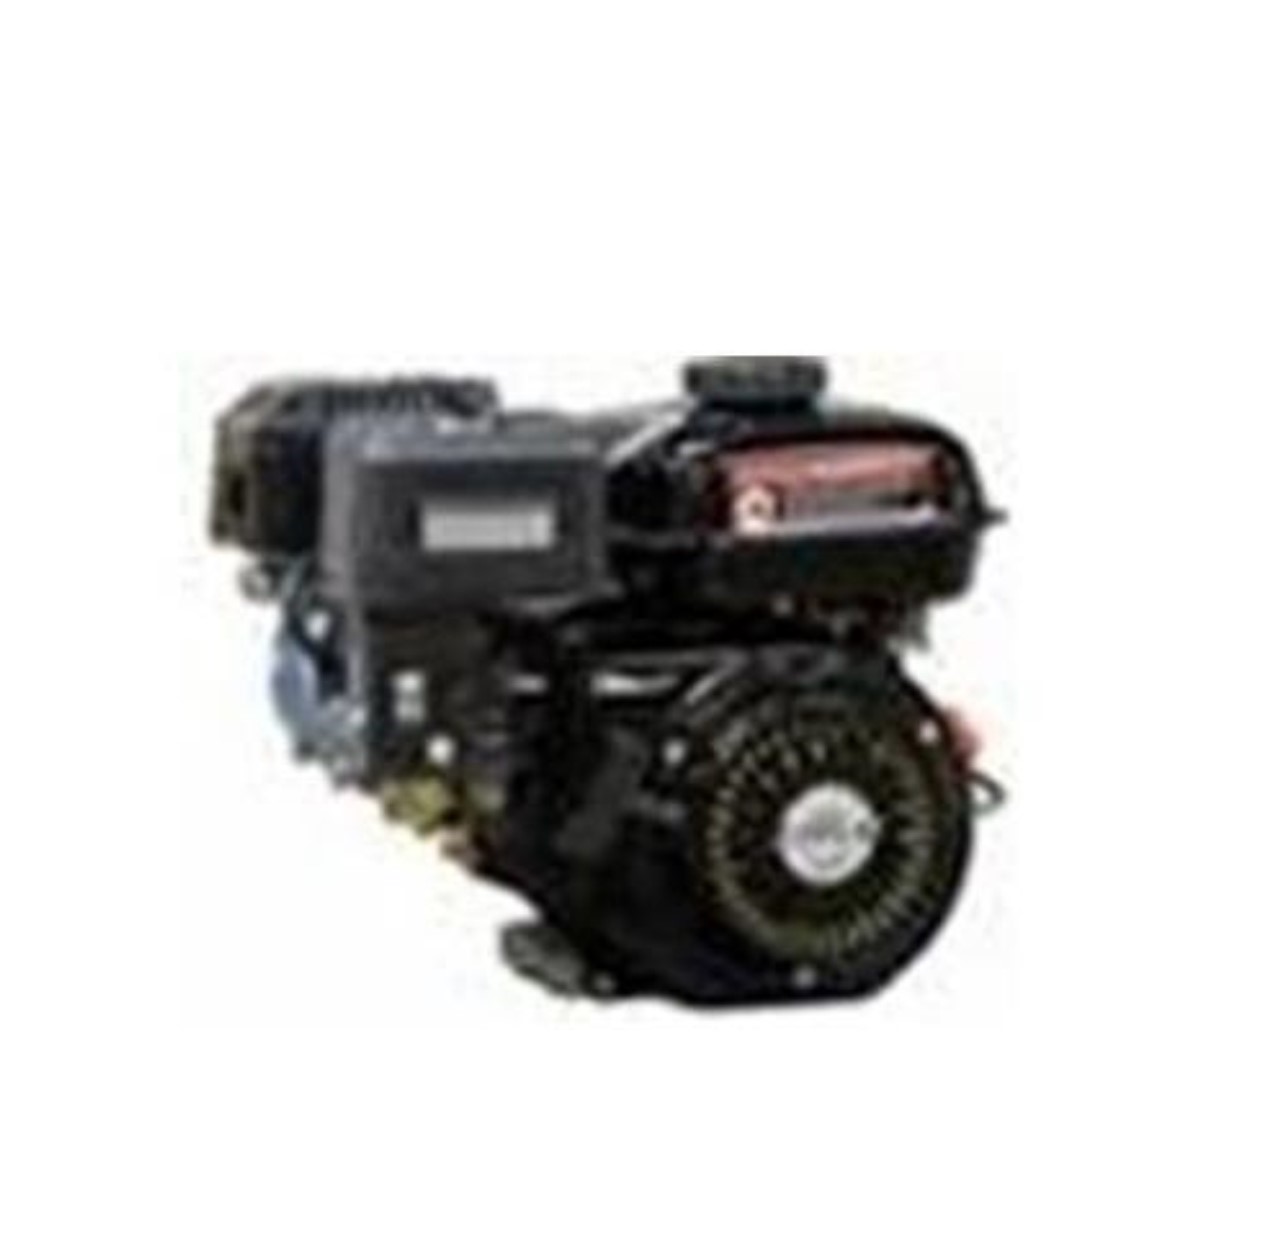 240-390cc Honda Type Engine Parts Used on Pressure Washers and Generators